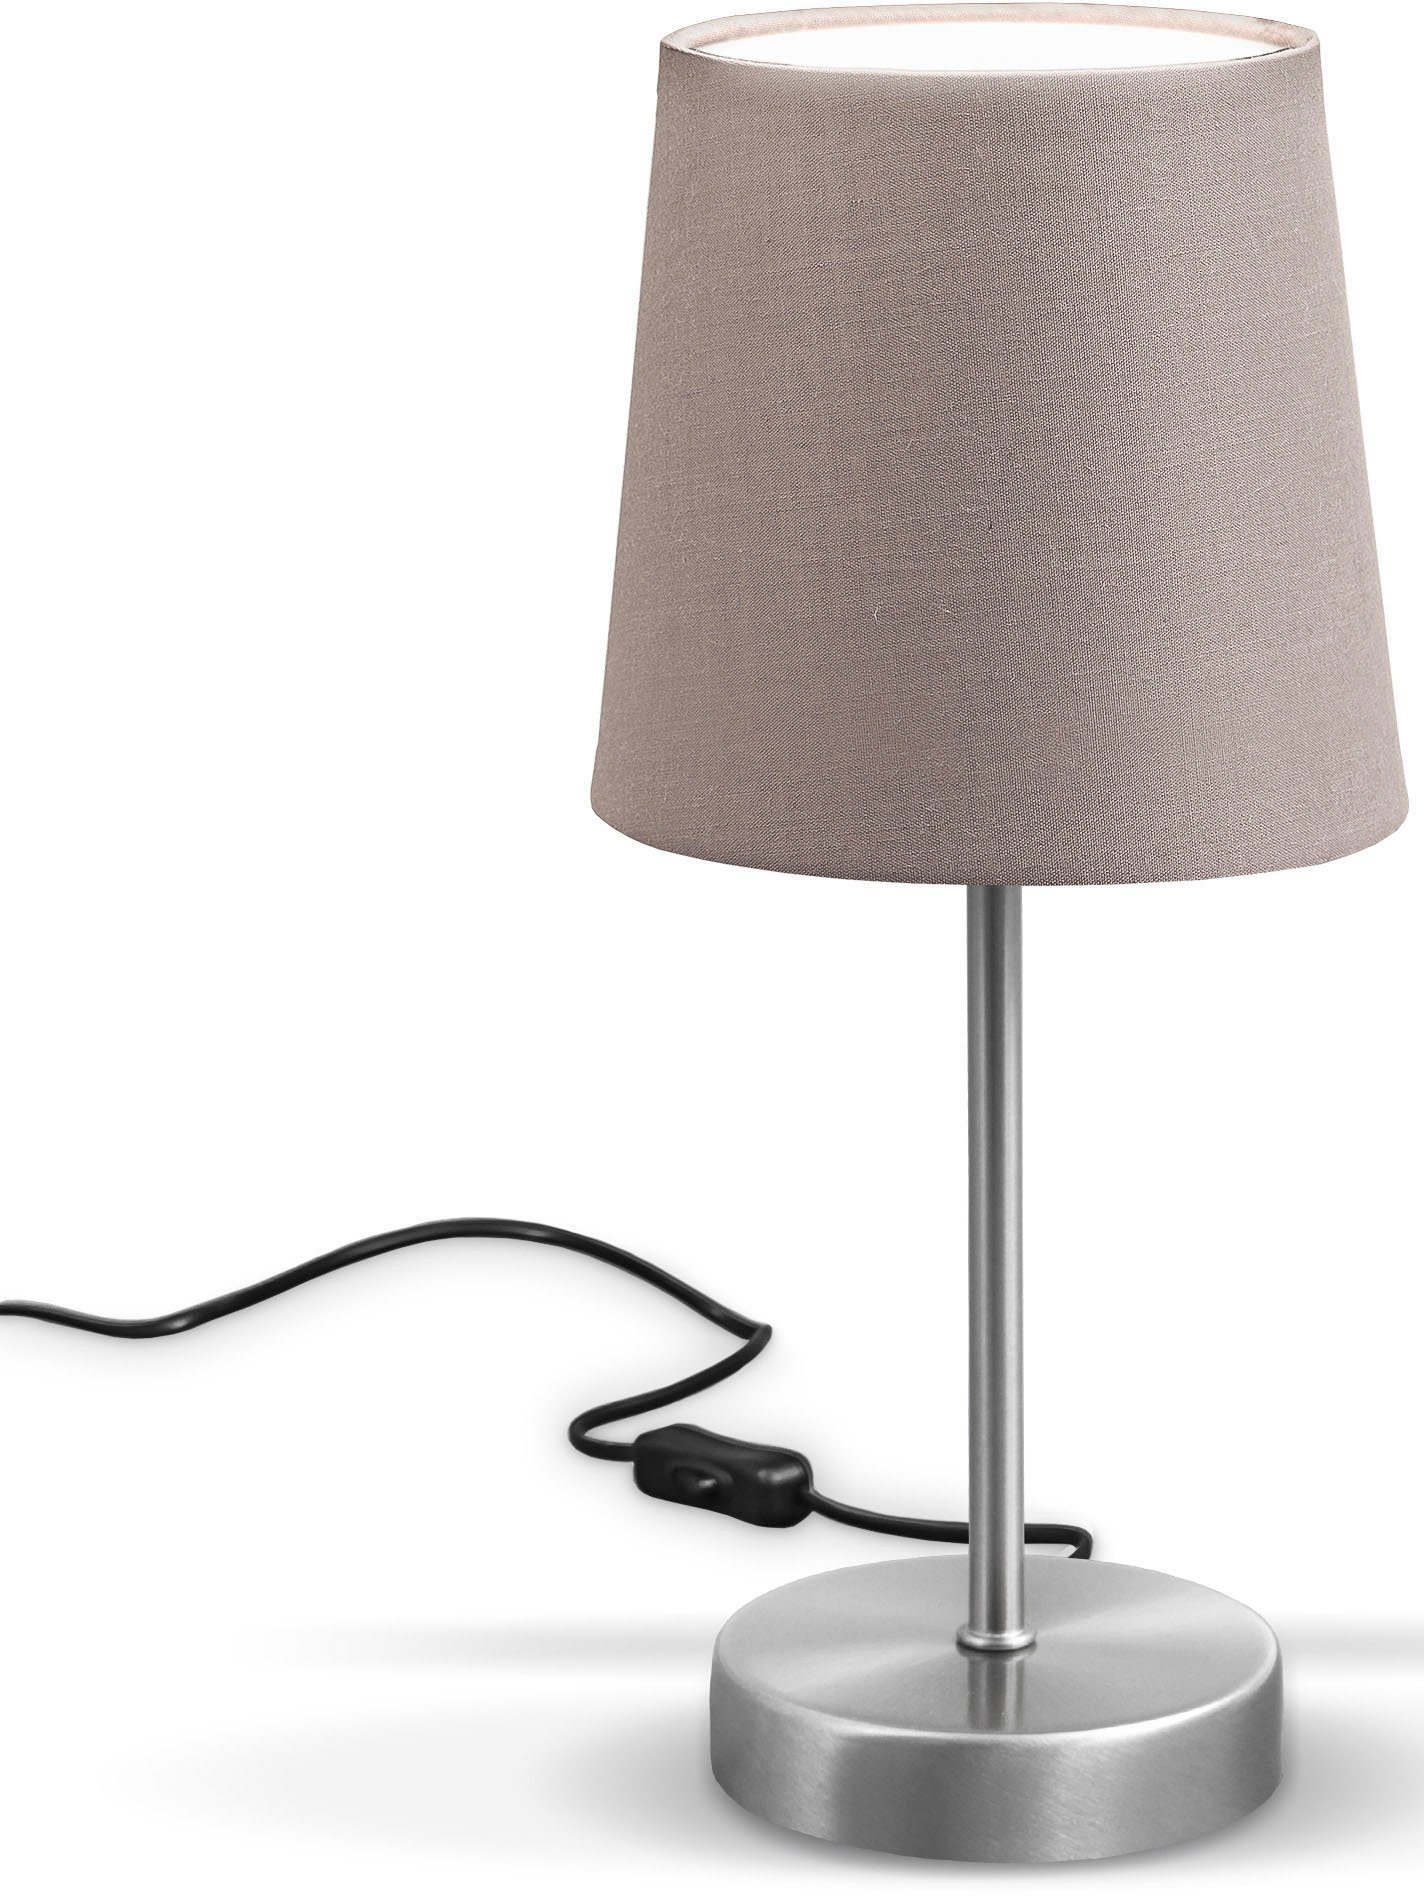 b.k.licht tafellamp bk_tl1299 led tafellamp, stoffen kap taupe, e14-fitting bedlampje, met schakelaar, ip20, zonder lampen (max. 25 w) (1 stuk) bruin